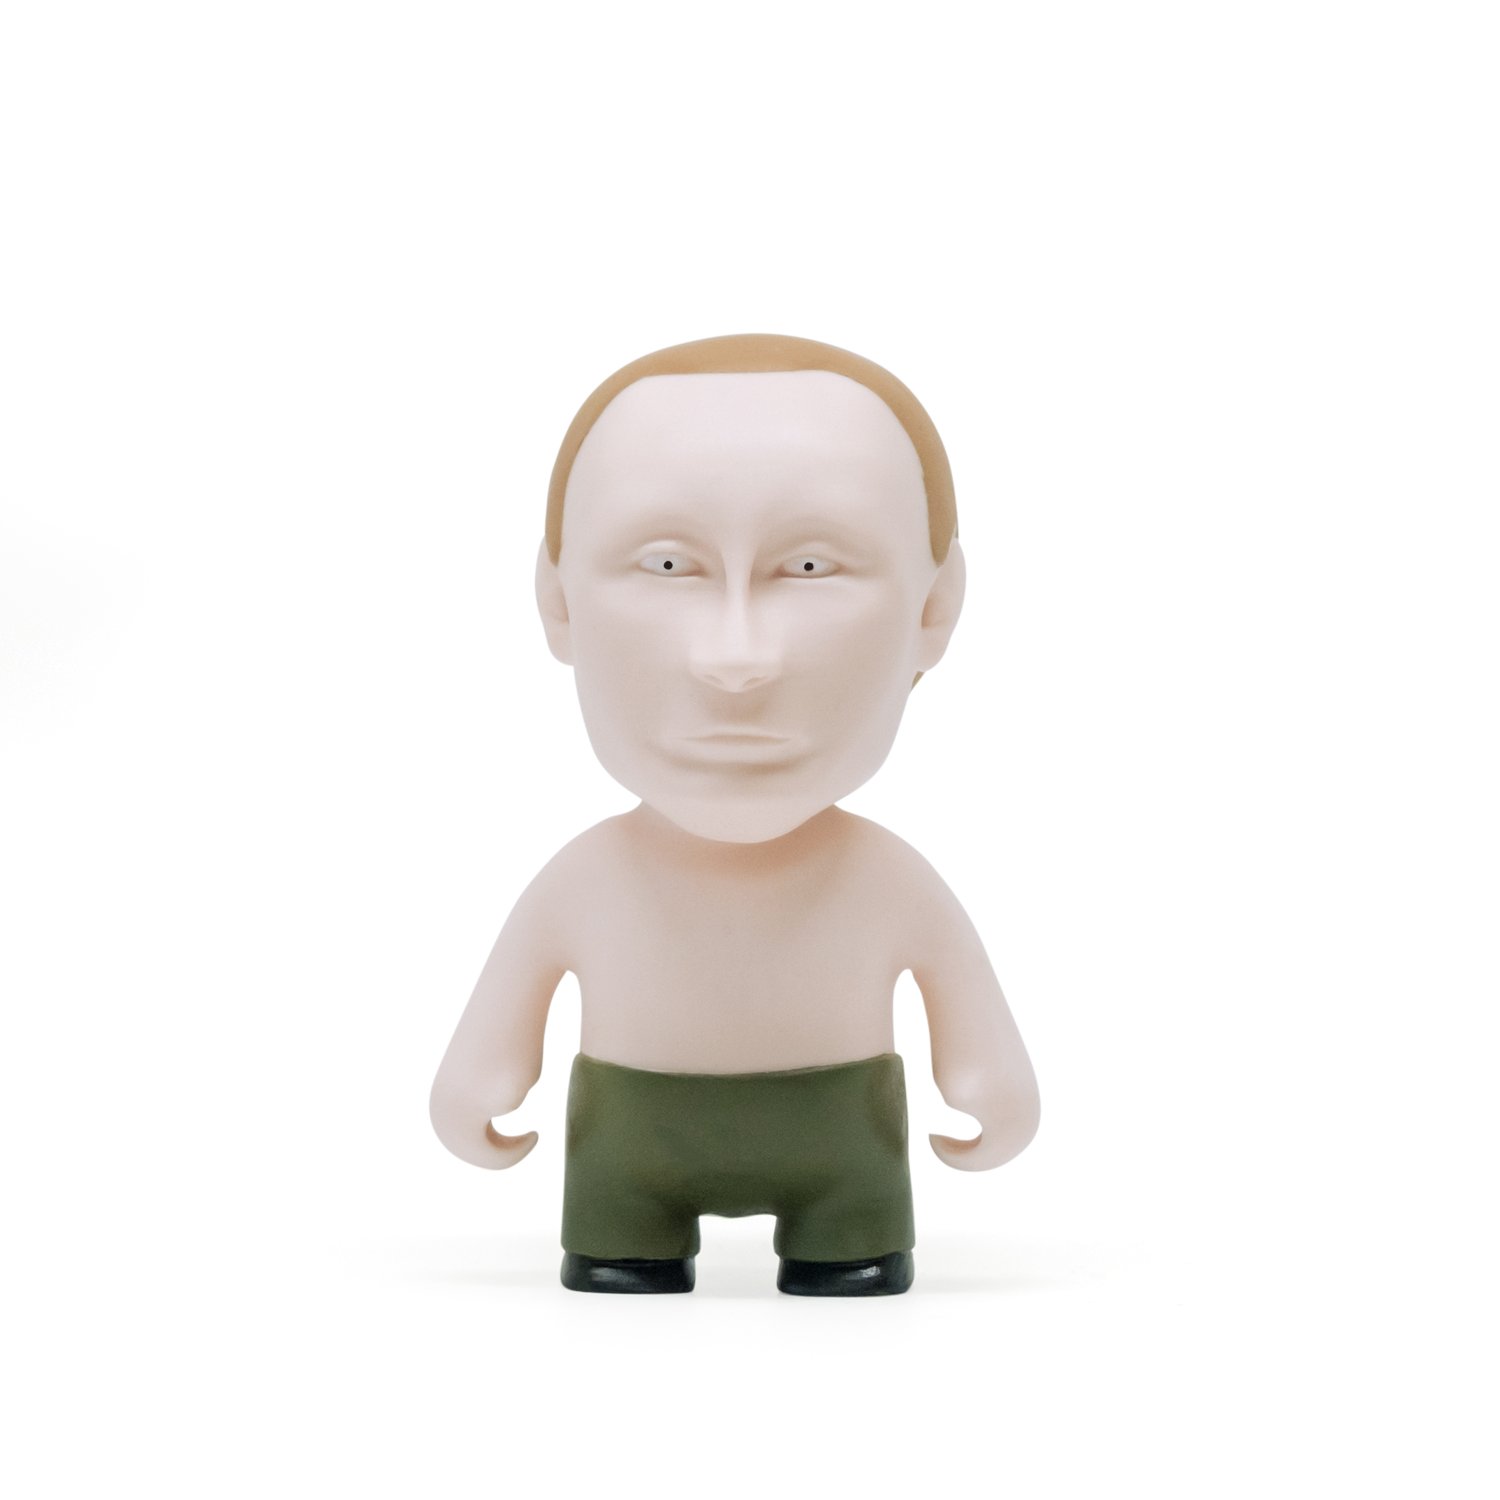 Image of Vladimir